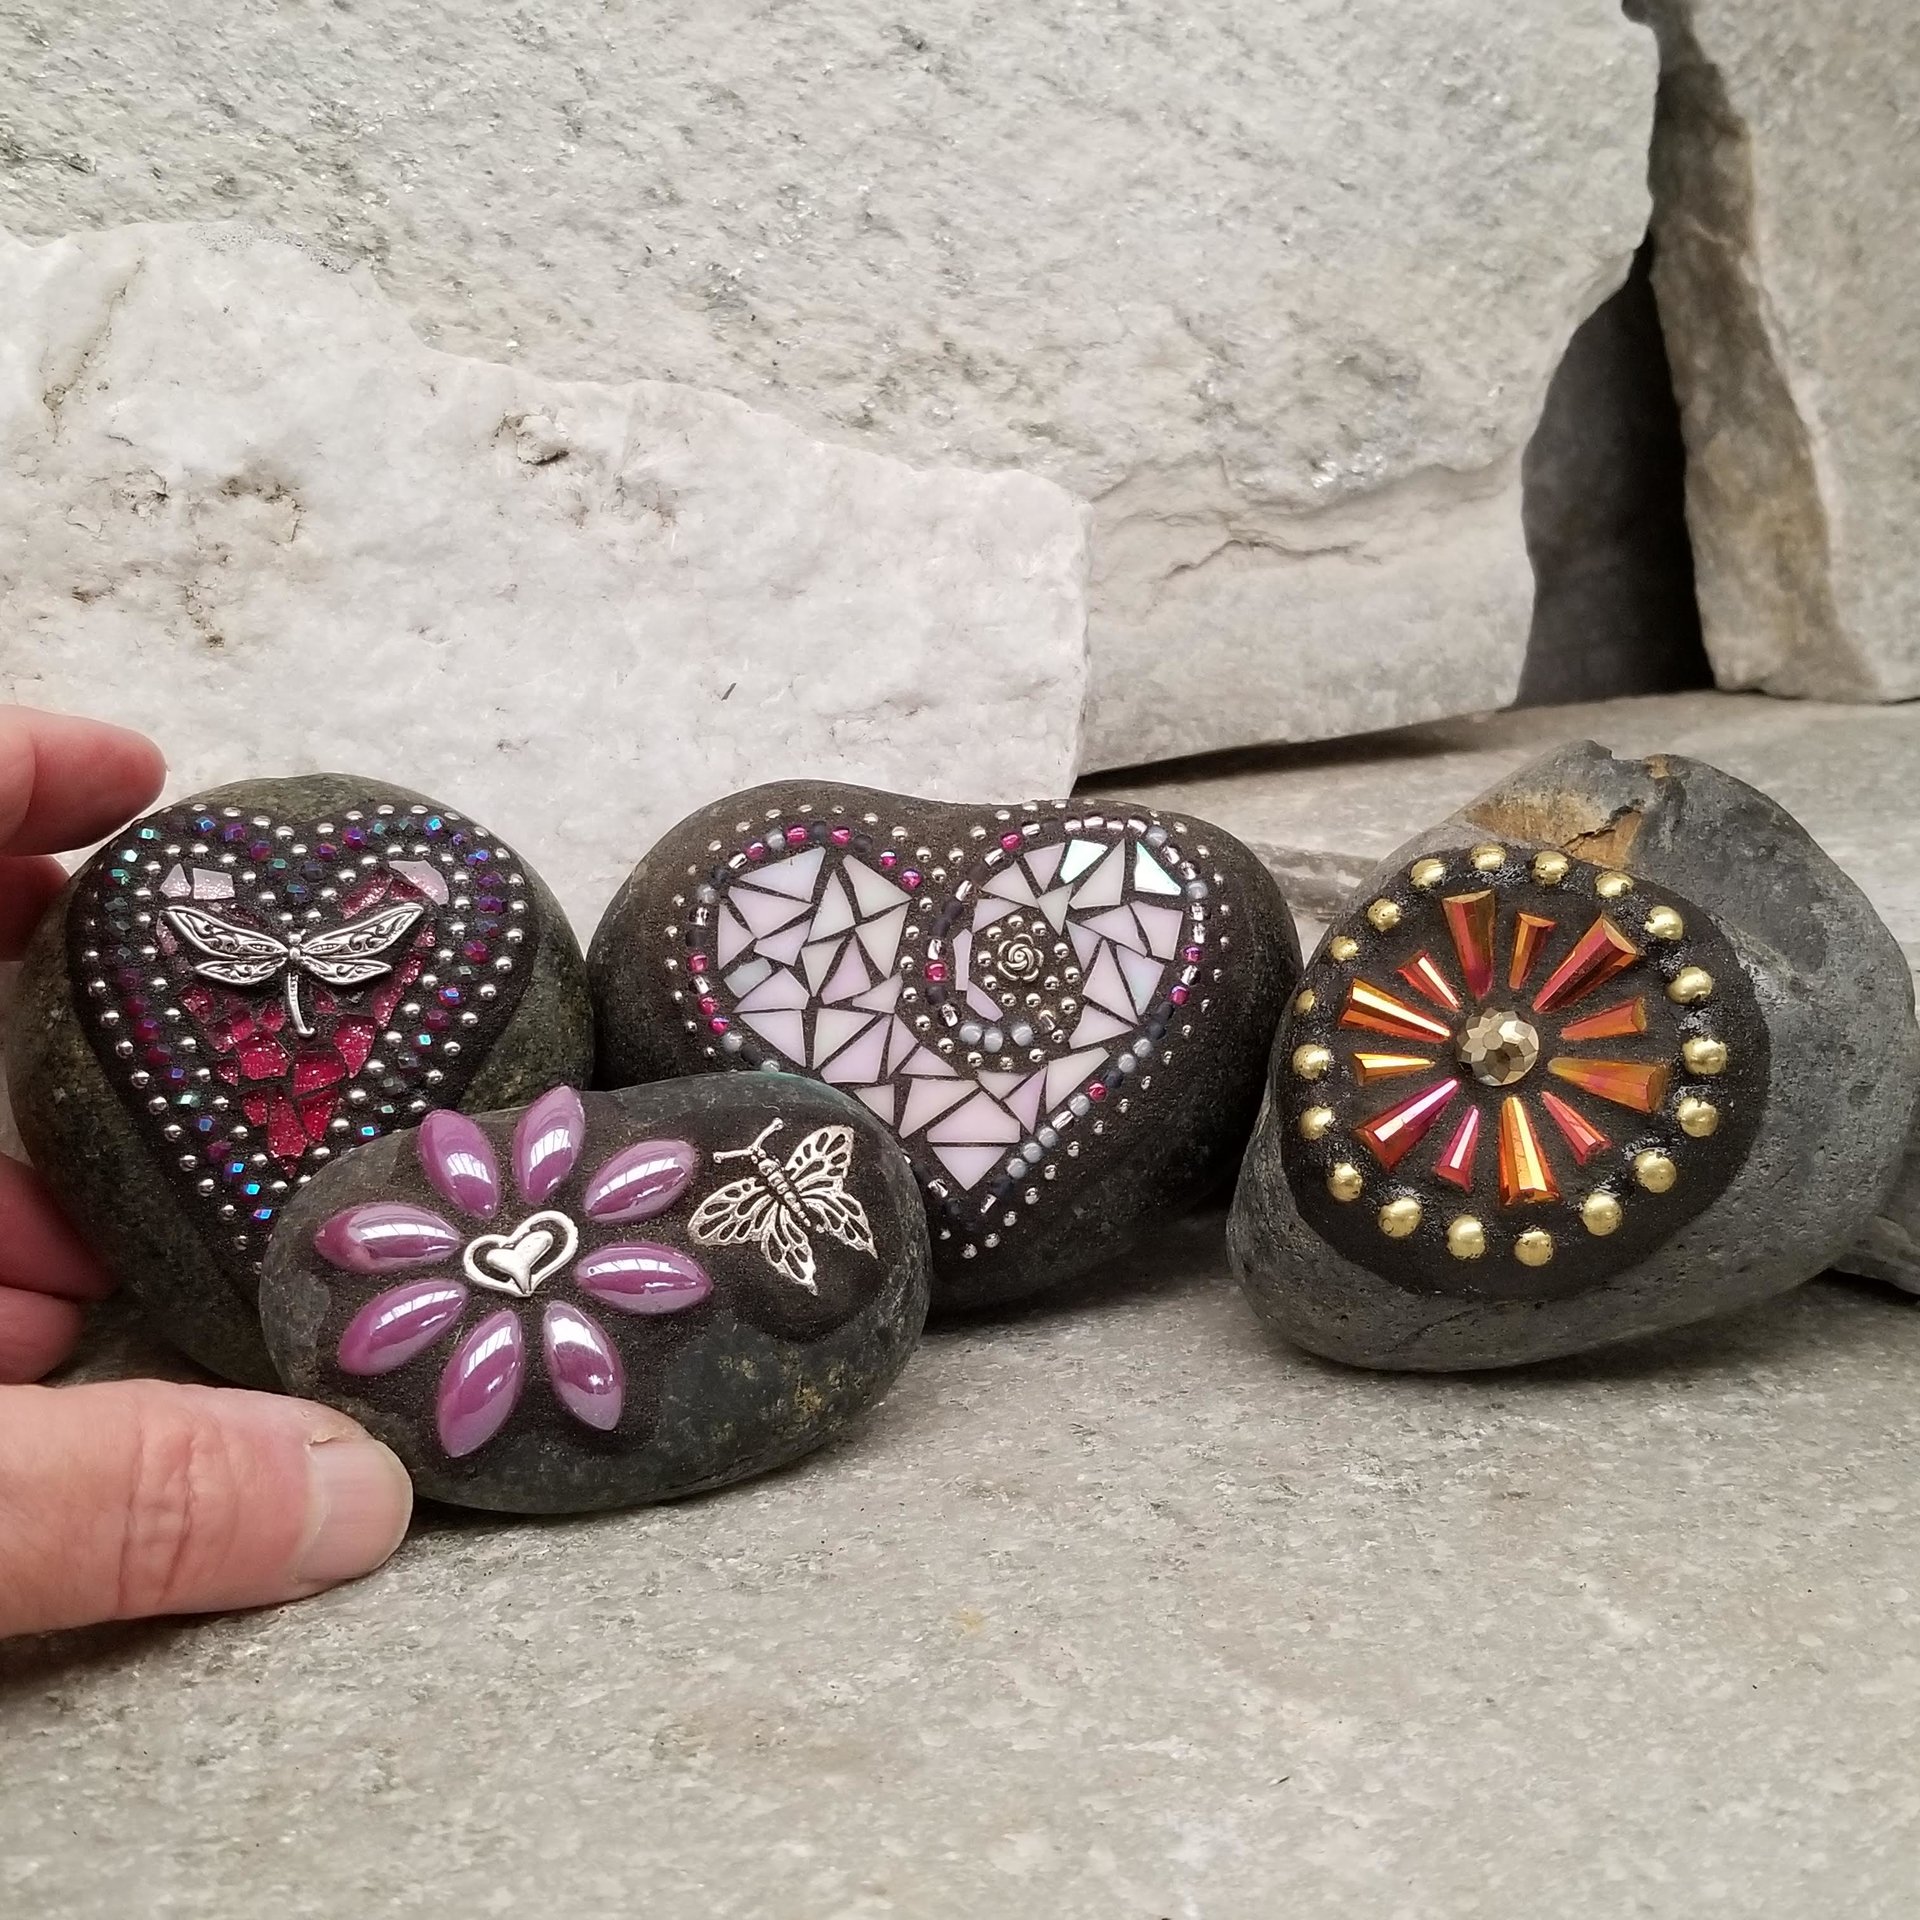 Garden Stone Paperweights, Secret Santa Stocking Stuffer, #4 Group Mosaic Heart and Rocks, Mosaic Garden Stone, Home Decor, Gardening, Gardening Gift,